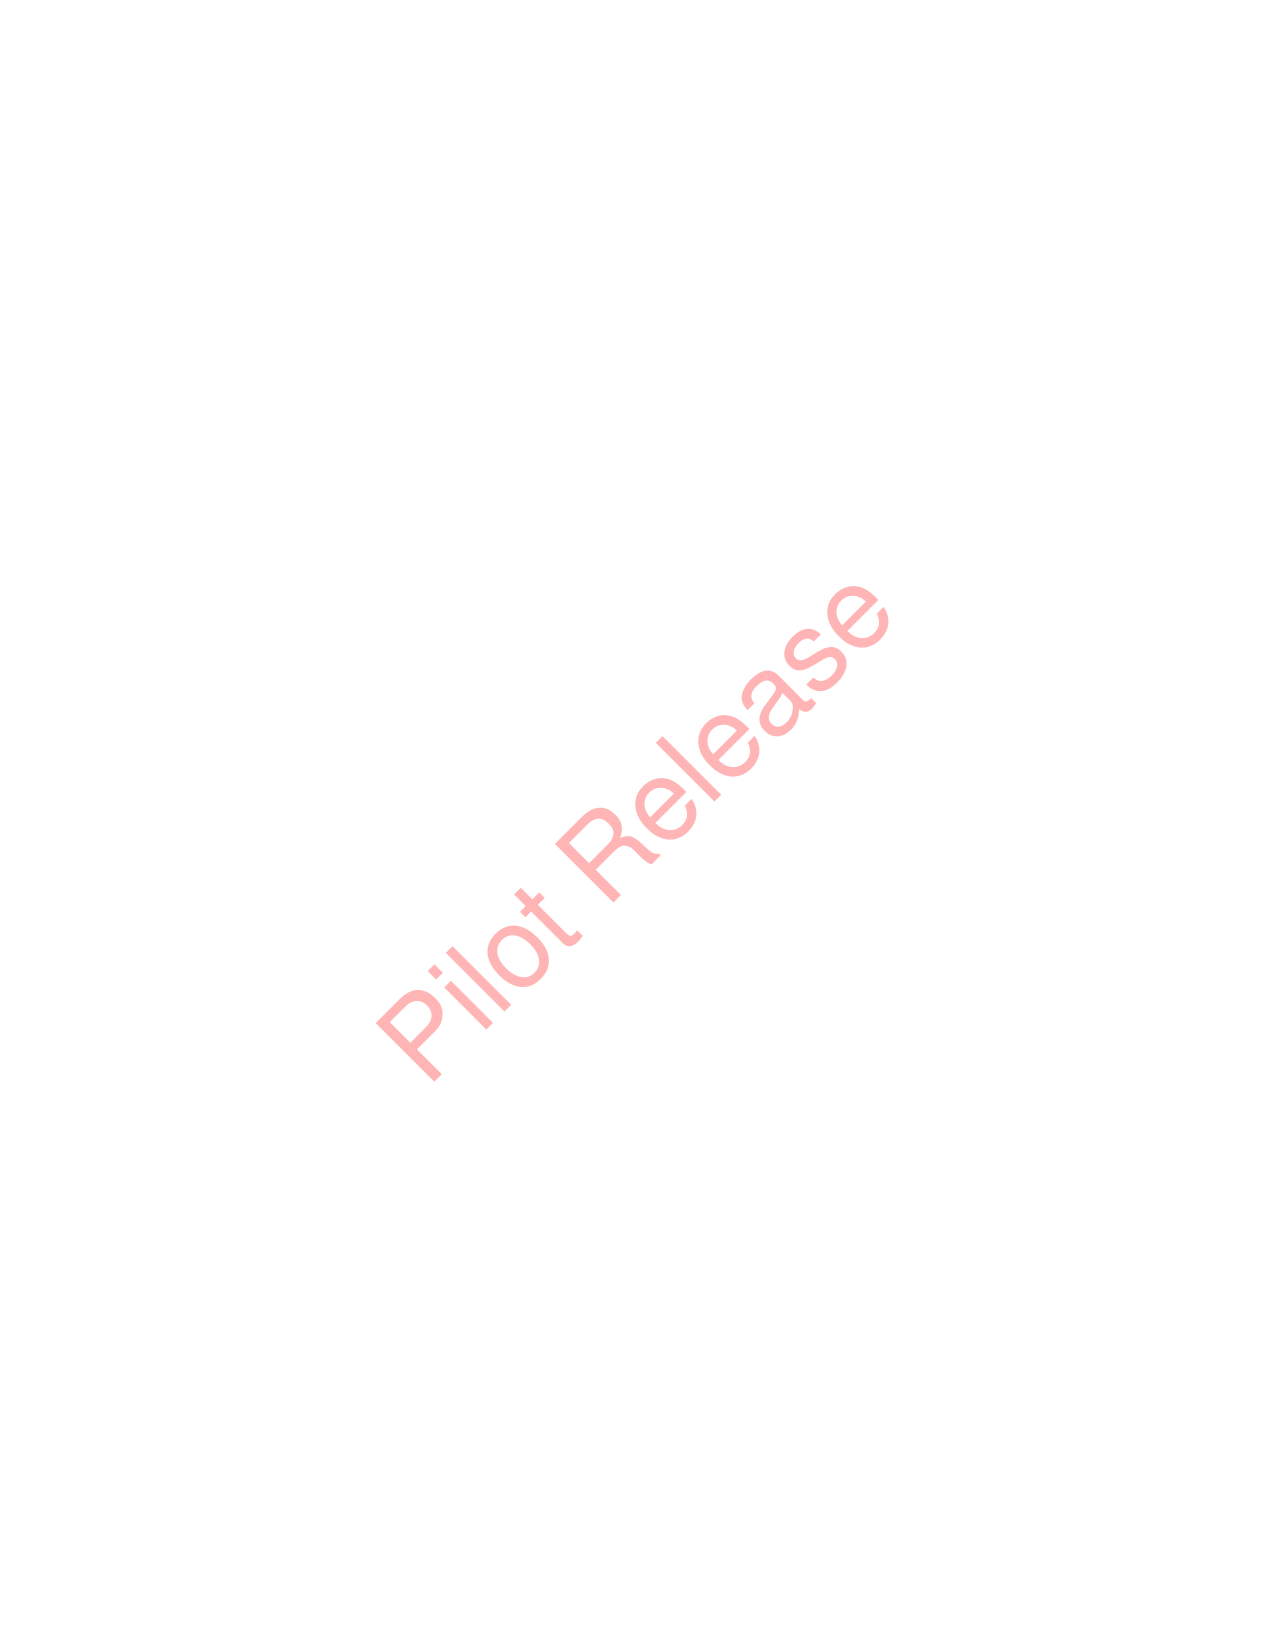 Pilot Release